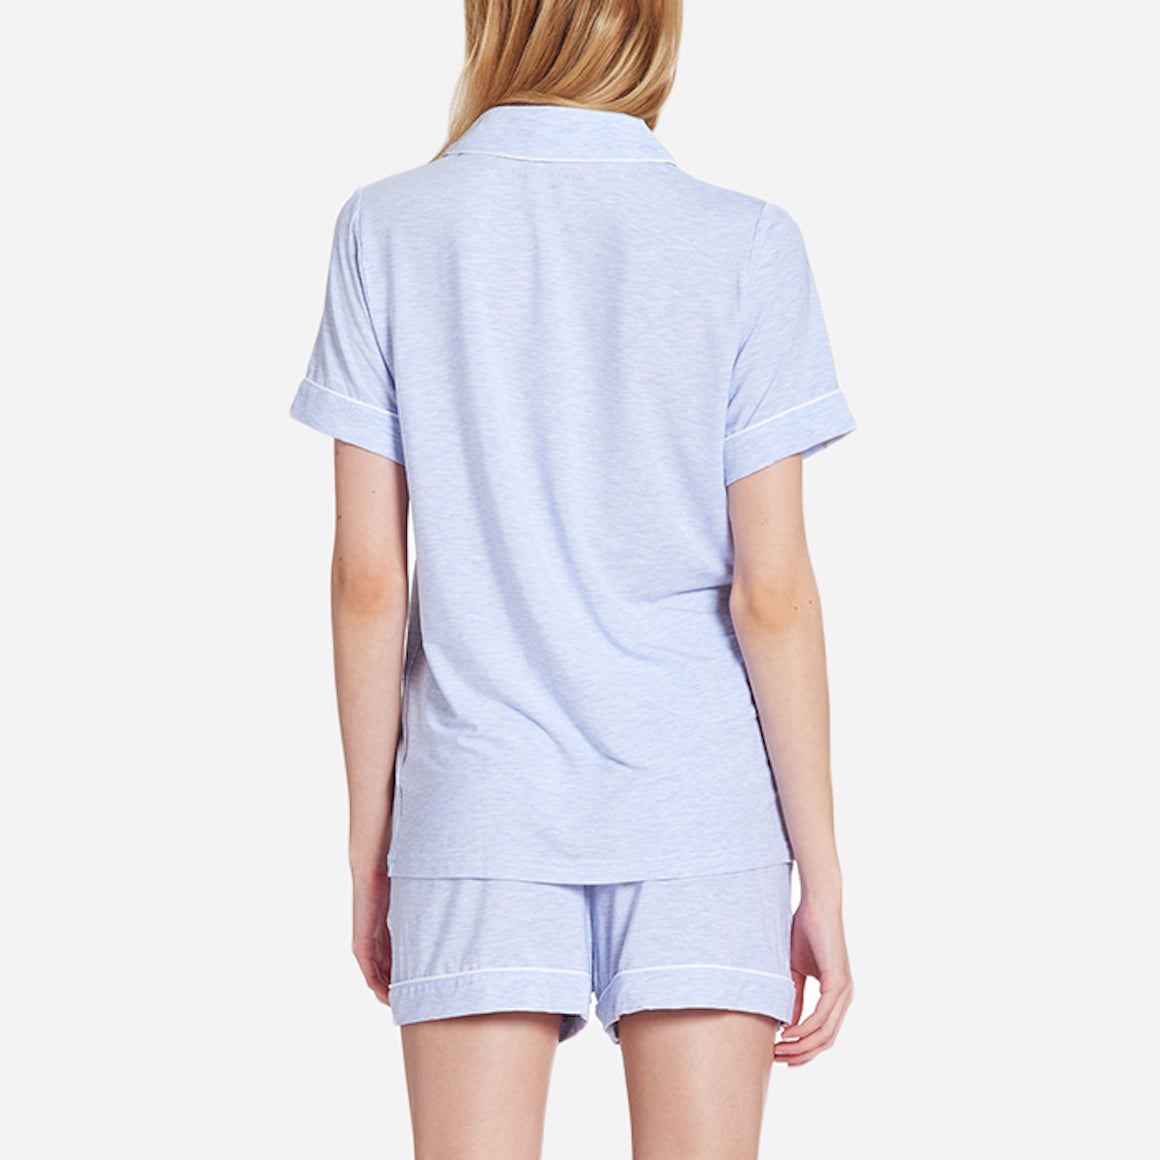 Back-facing model wearing a light blue short sleeve top and bottom pajama set.